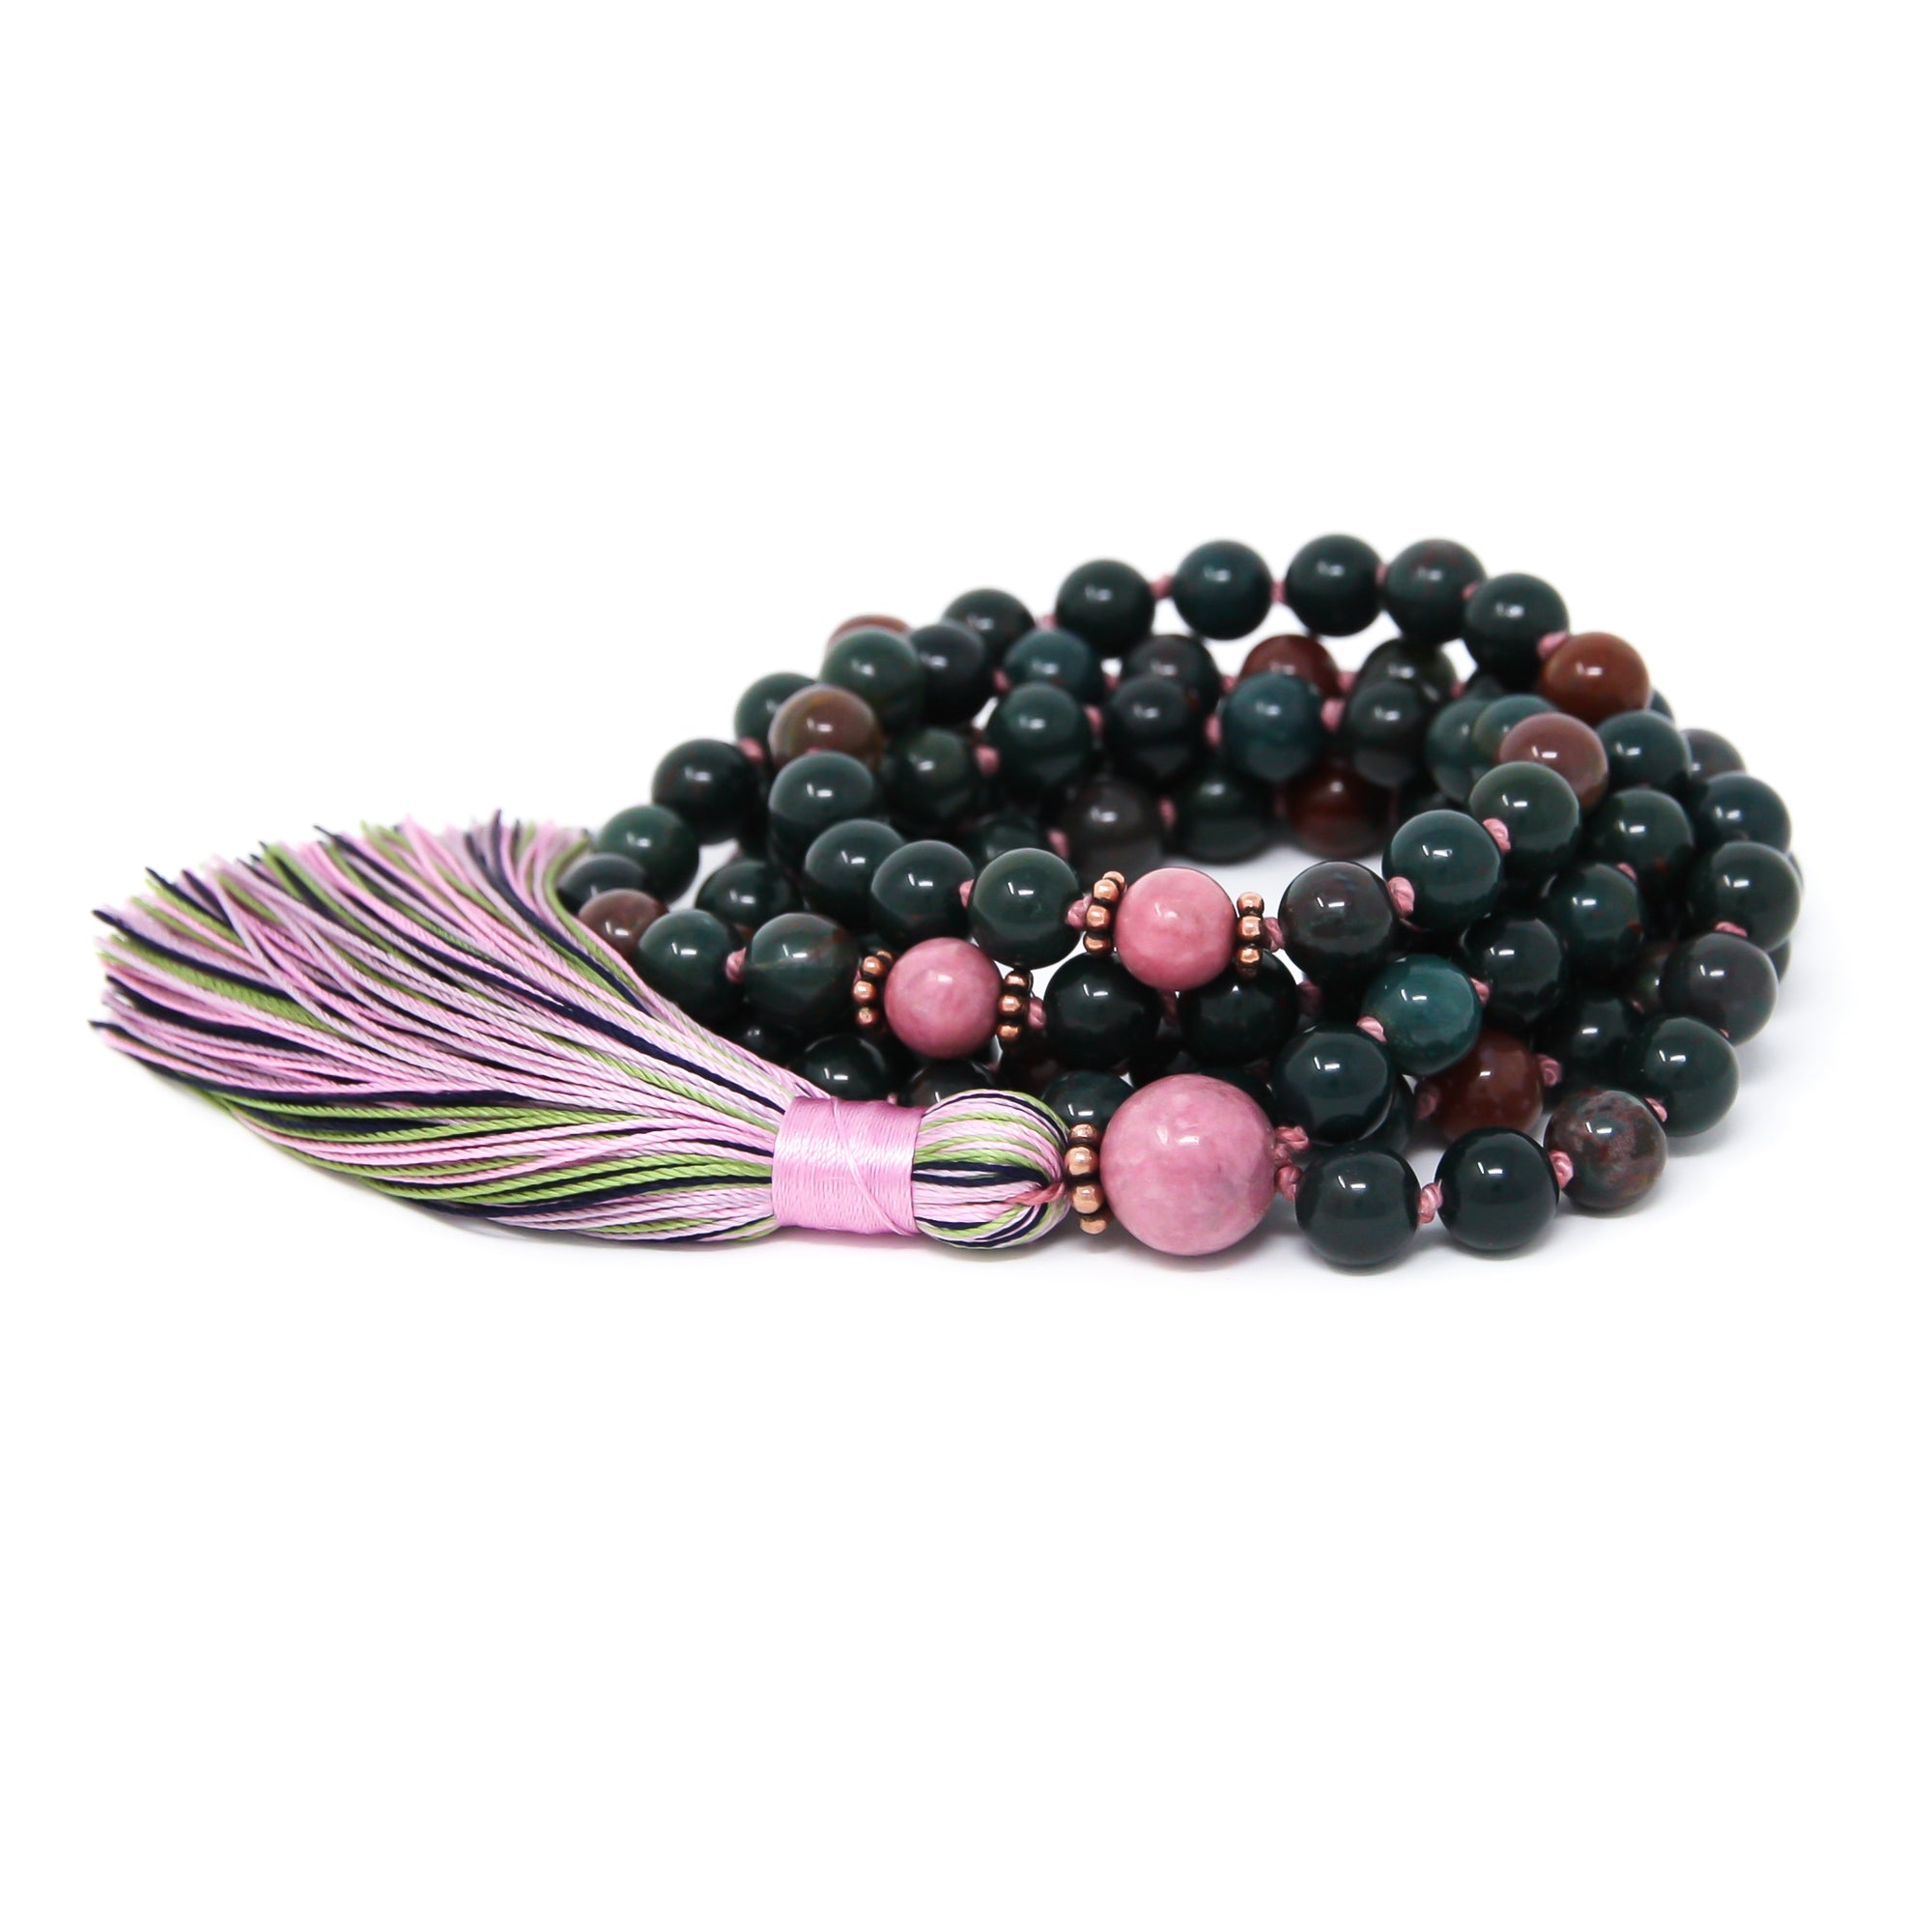 Indian Bloodstone mala necklace, buddhist prayer beads